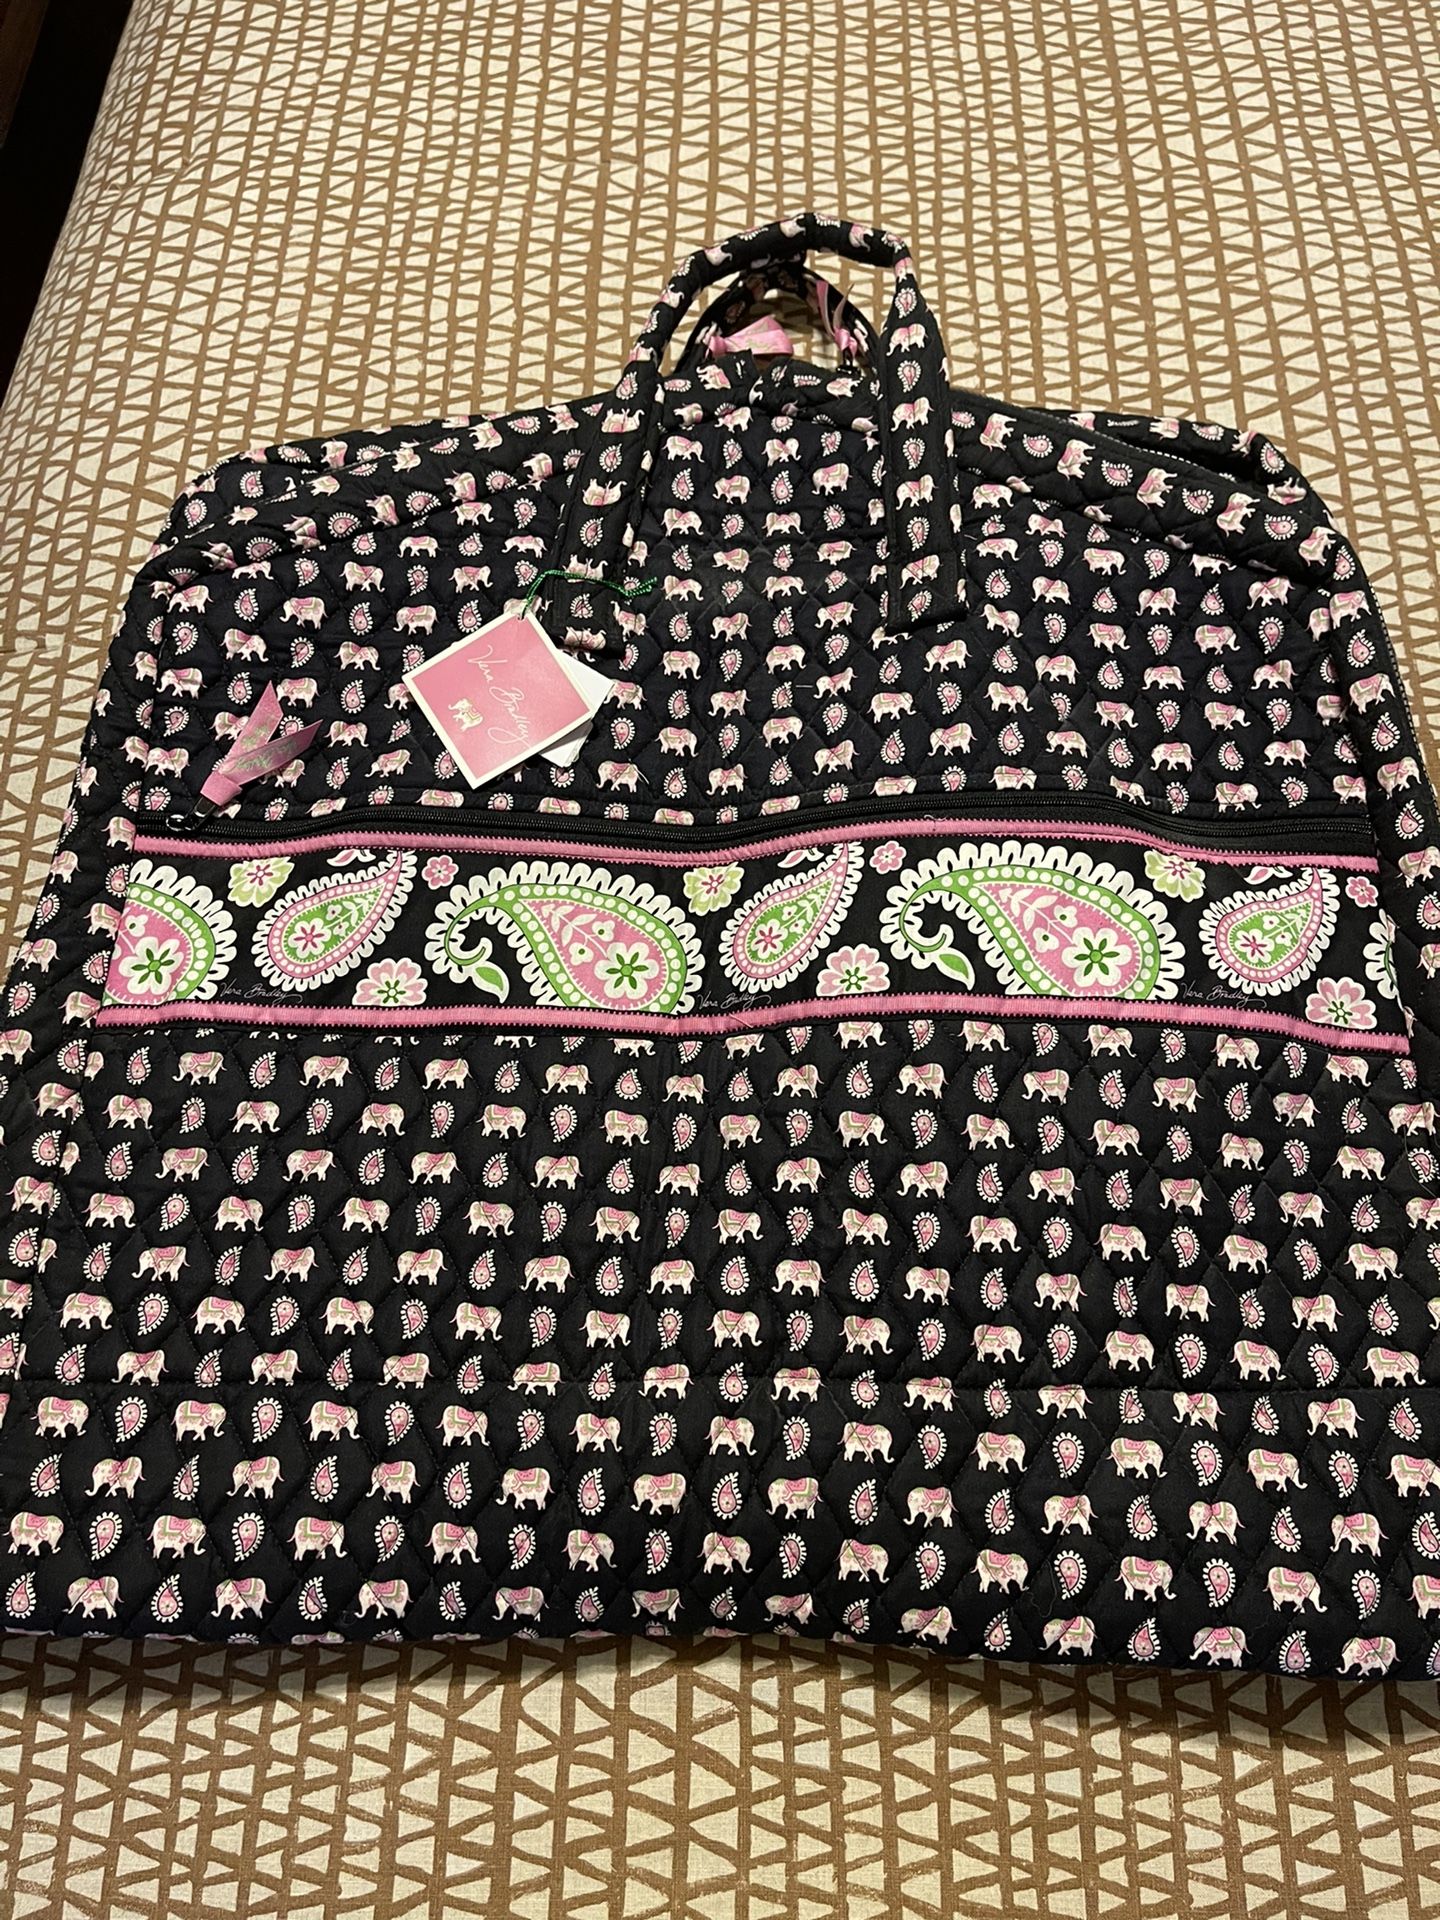 Vera Bradley Pink Elephant Garment Bag